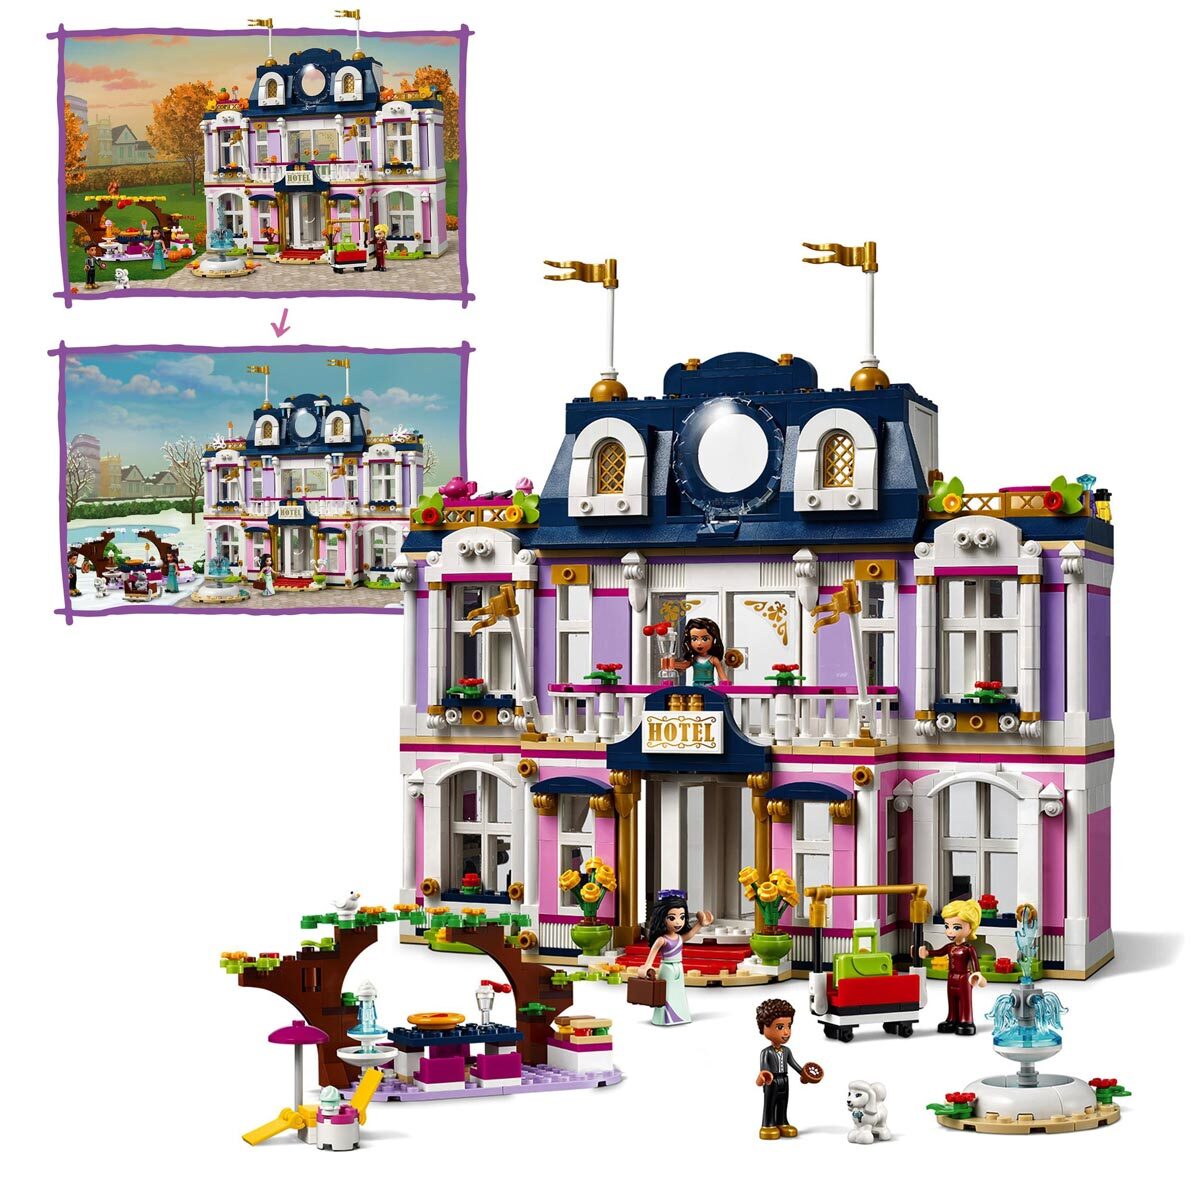 Buy LEGO Friends Heartlake City Grand Hotel Close up Image at costco.co.uk